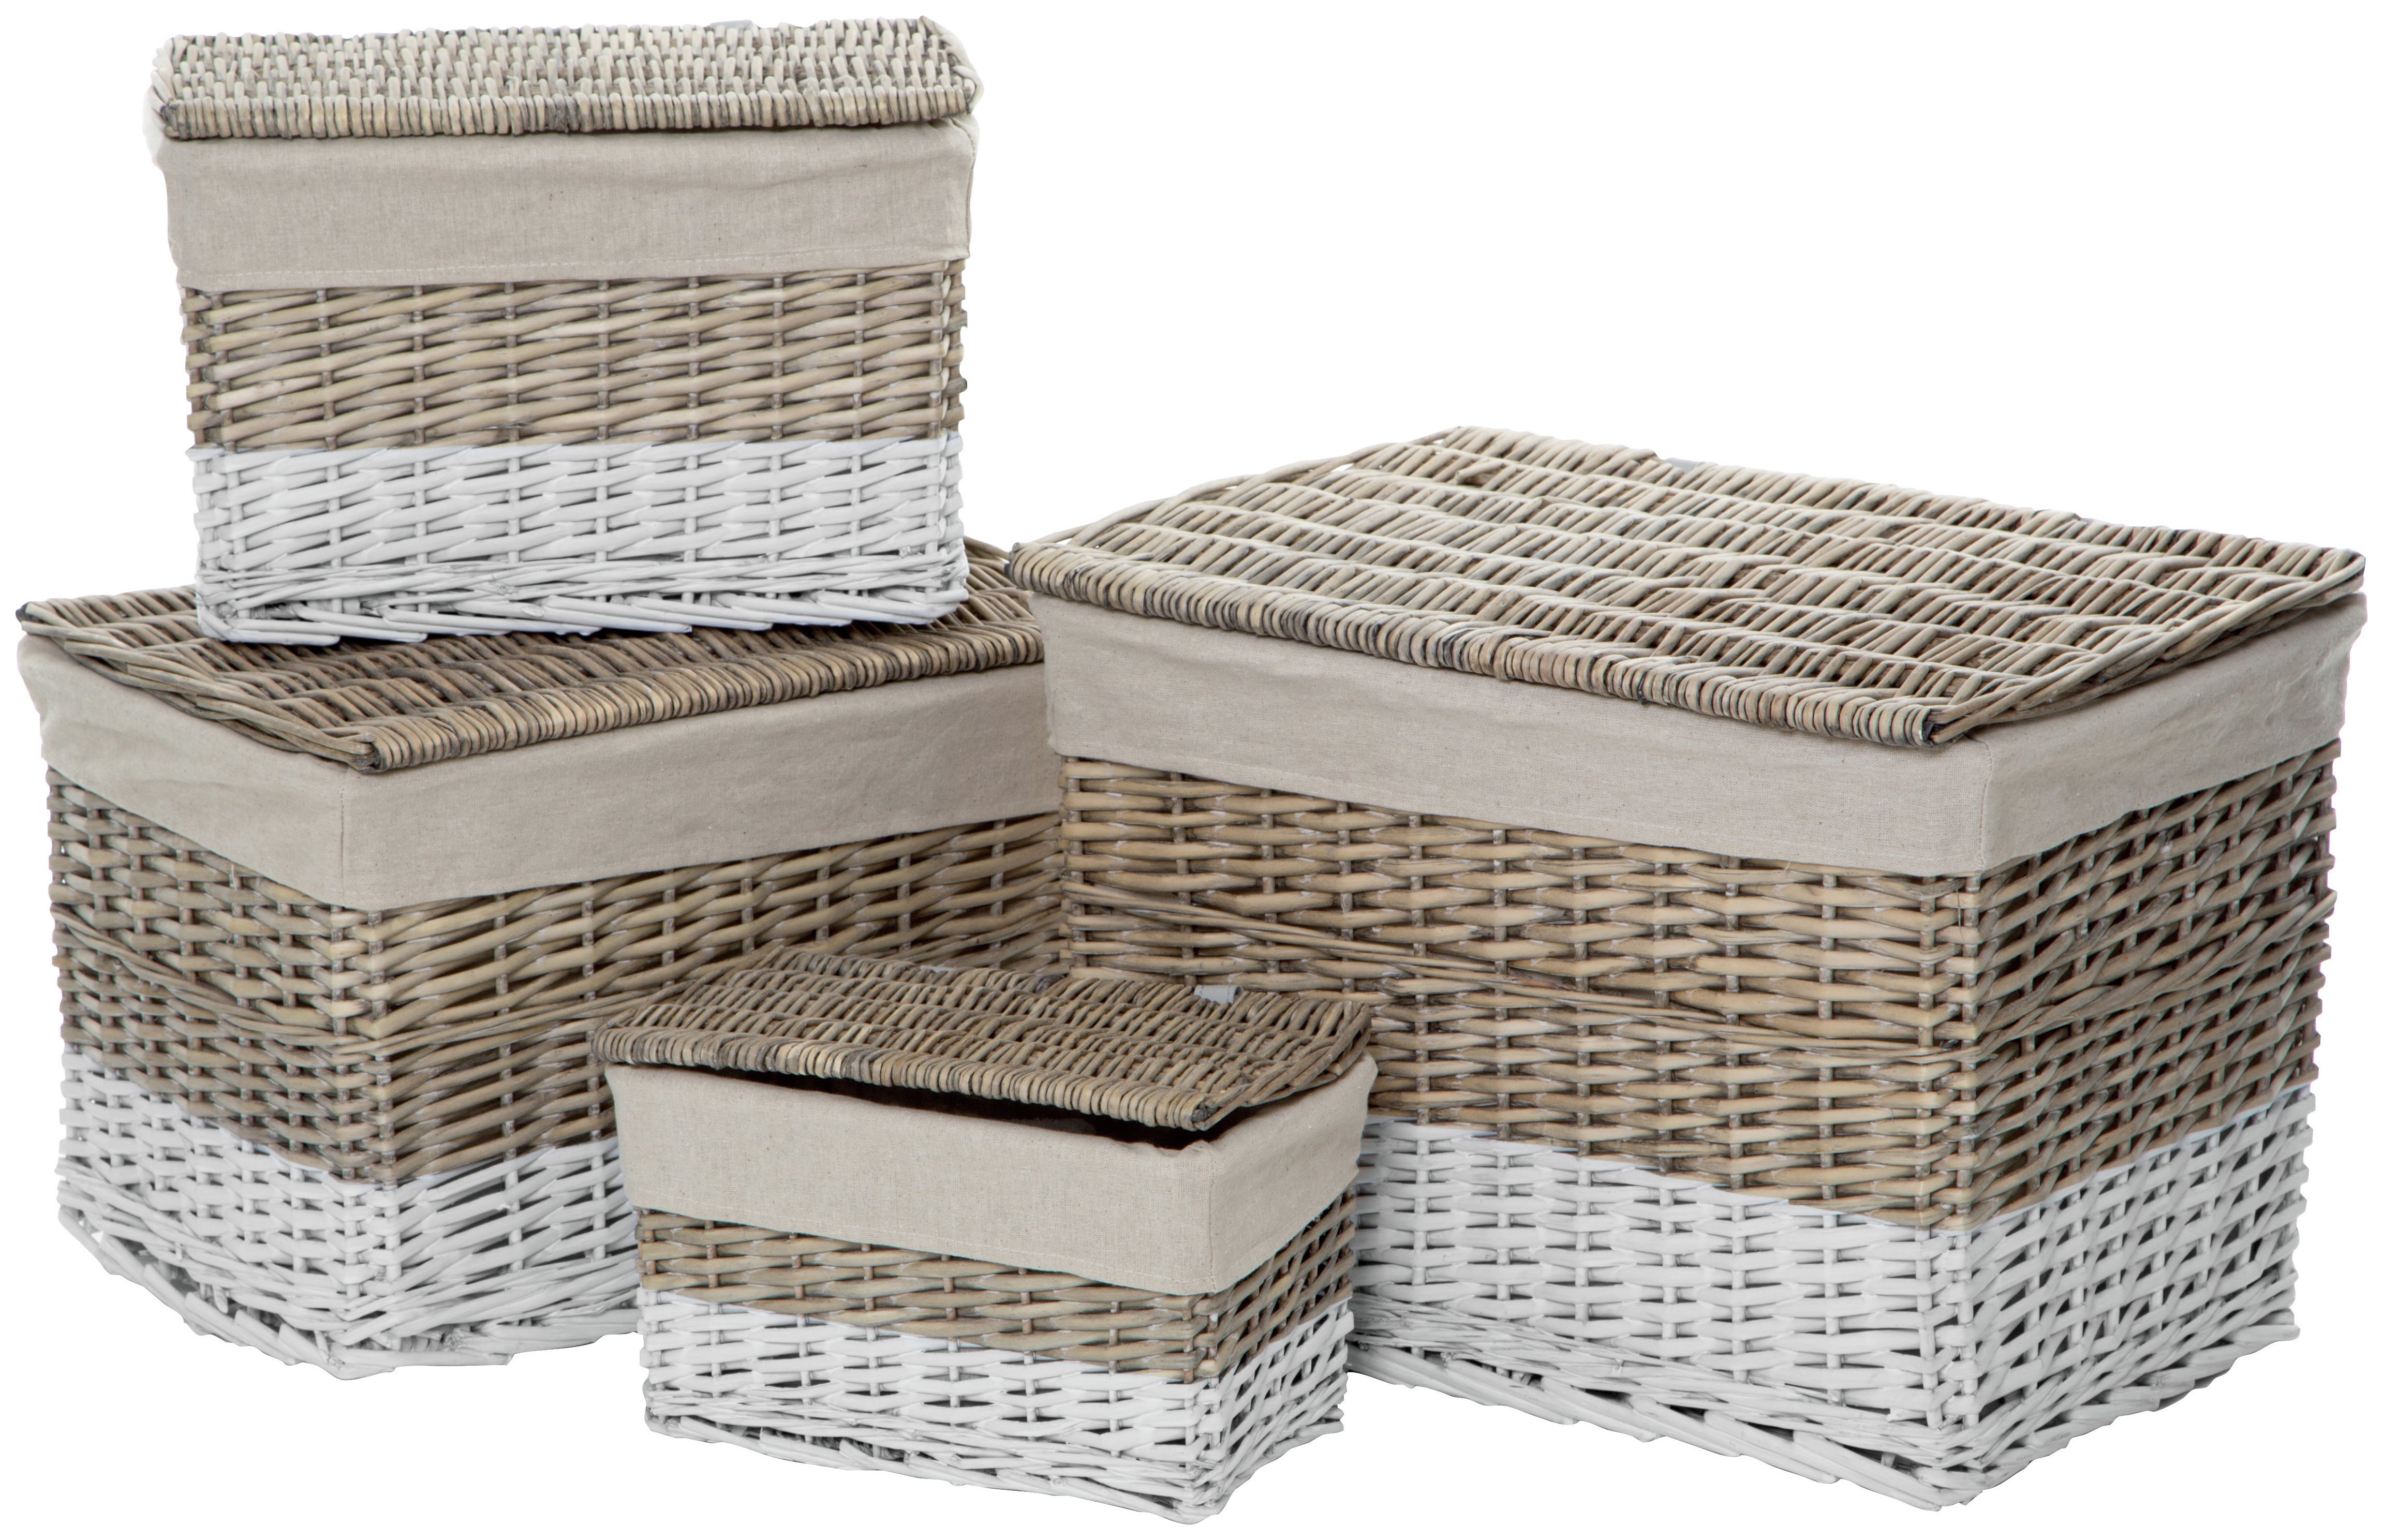 Premier Housewares Lida Rectangular Storage Baskets